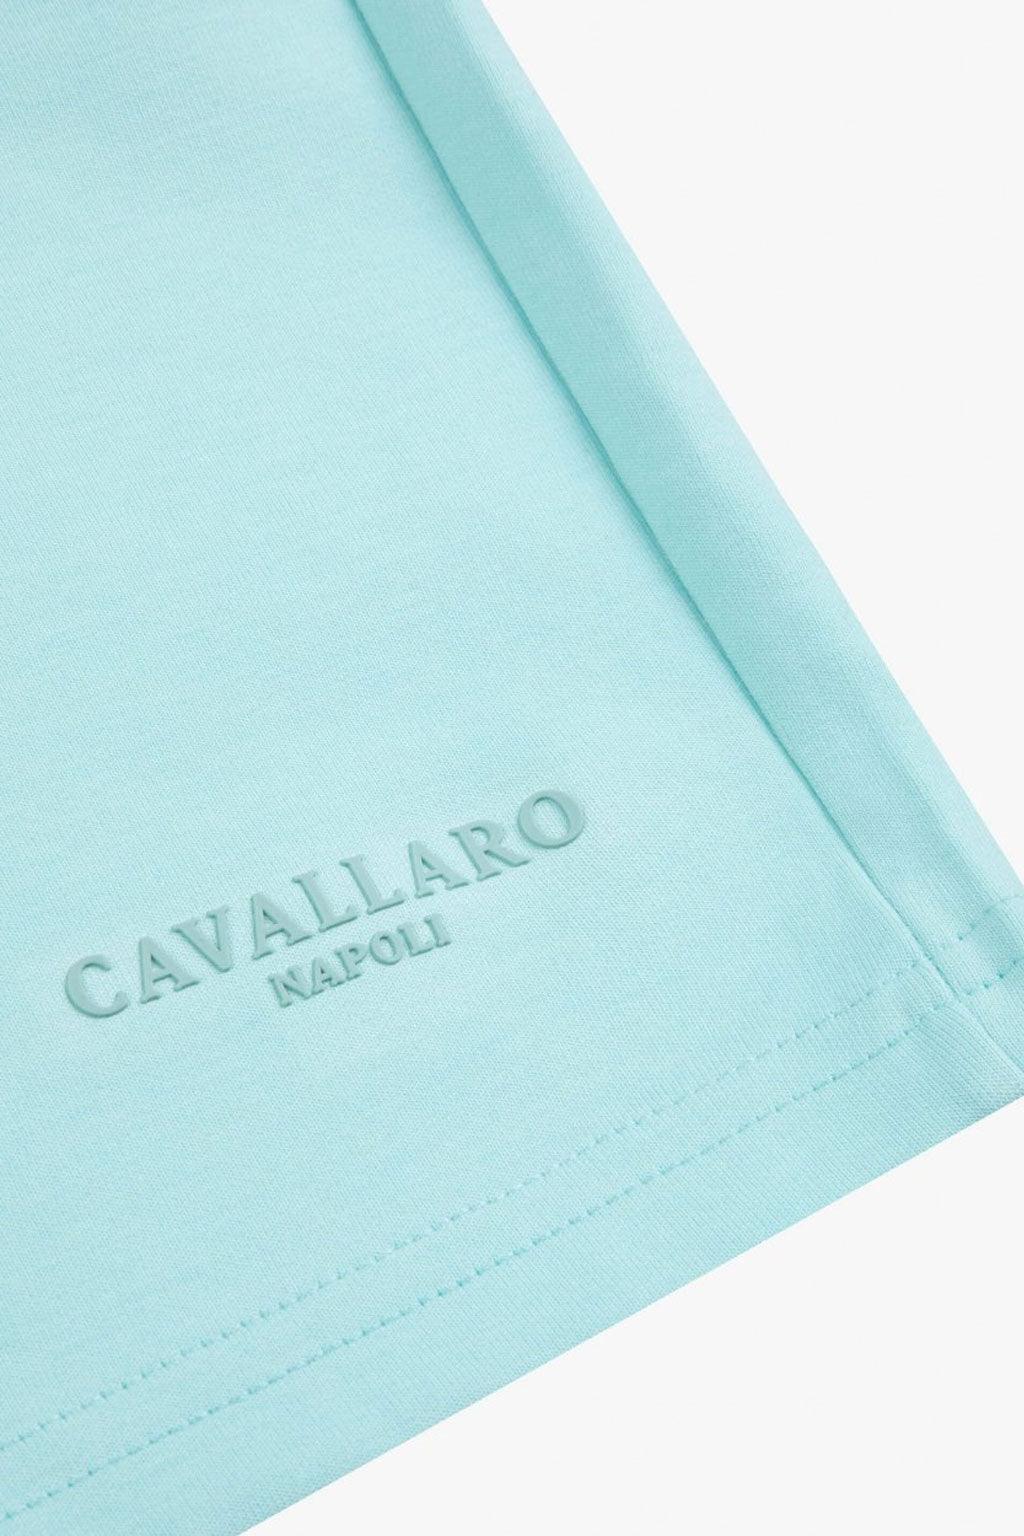 Cavallaro short - Big Boss | the menswear concept